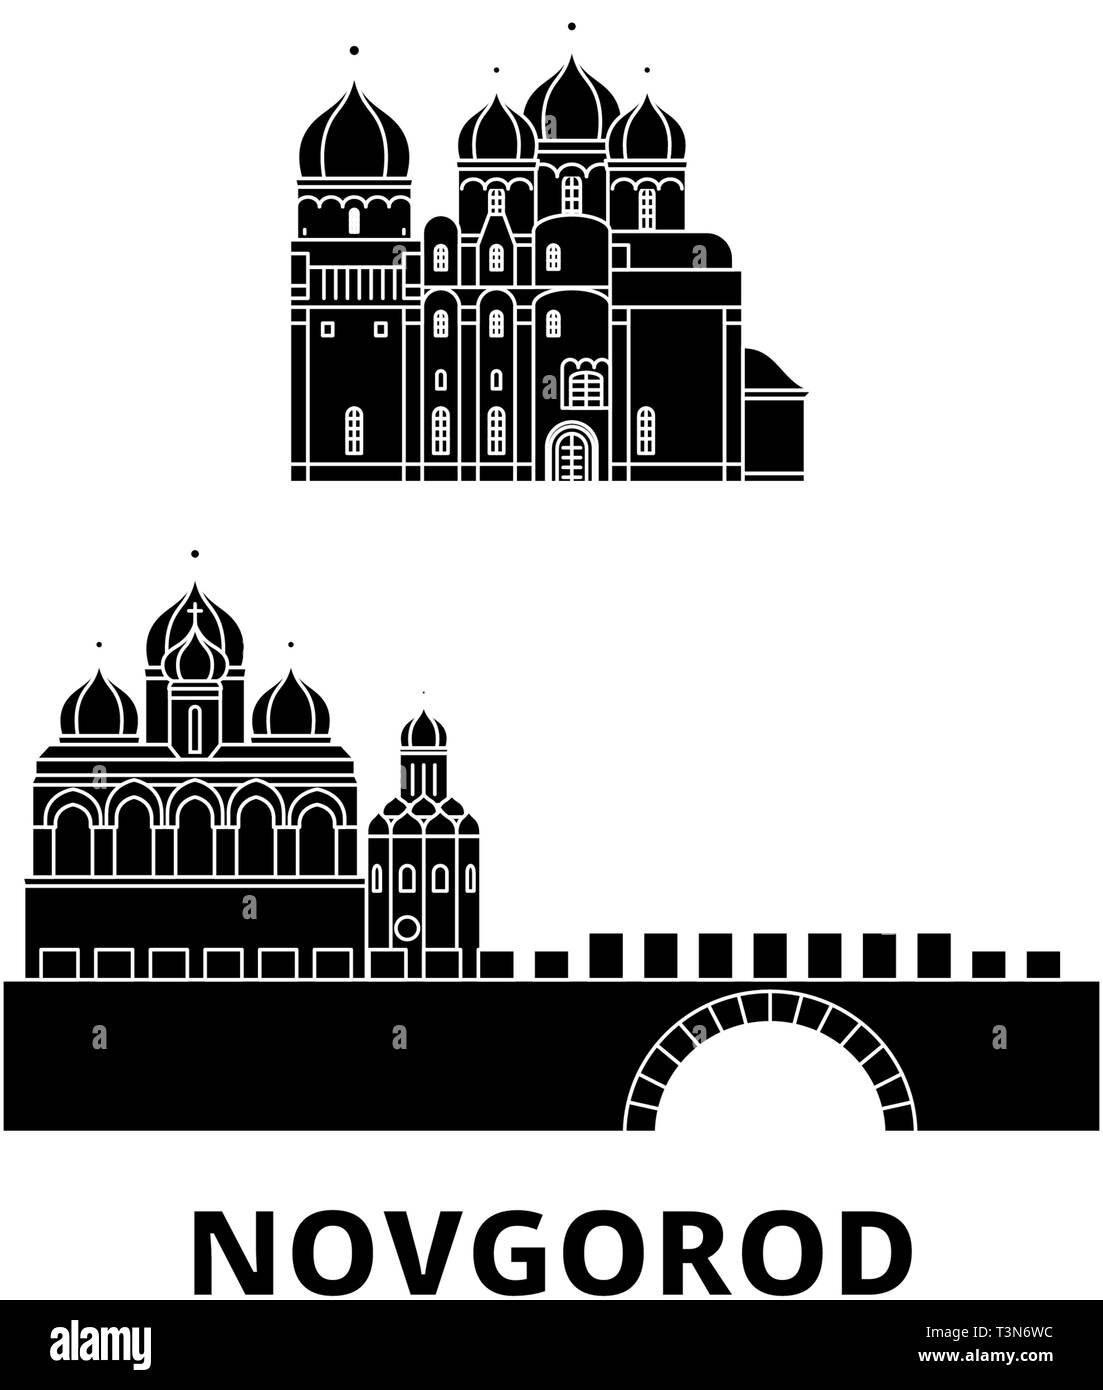 Russia, Novgorod flat travel skyline set. Russia, Novgorod black city vector illustration, symbol, travel sights, landmarks. Stock Vector